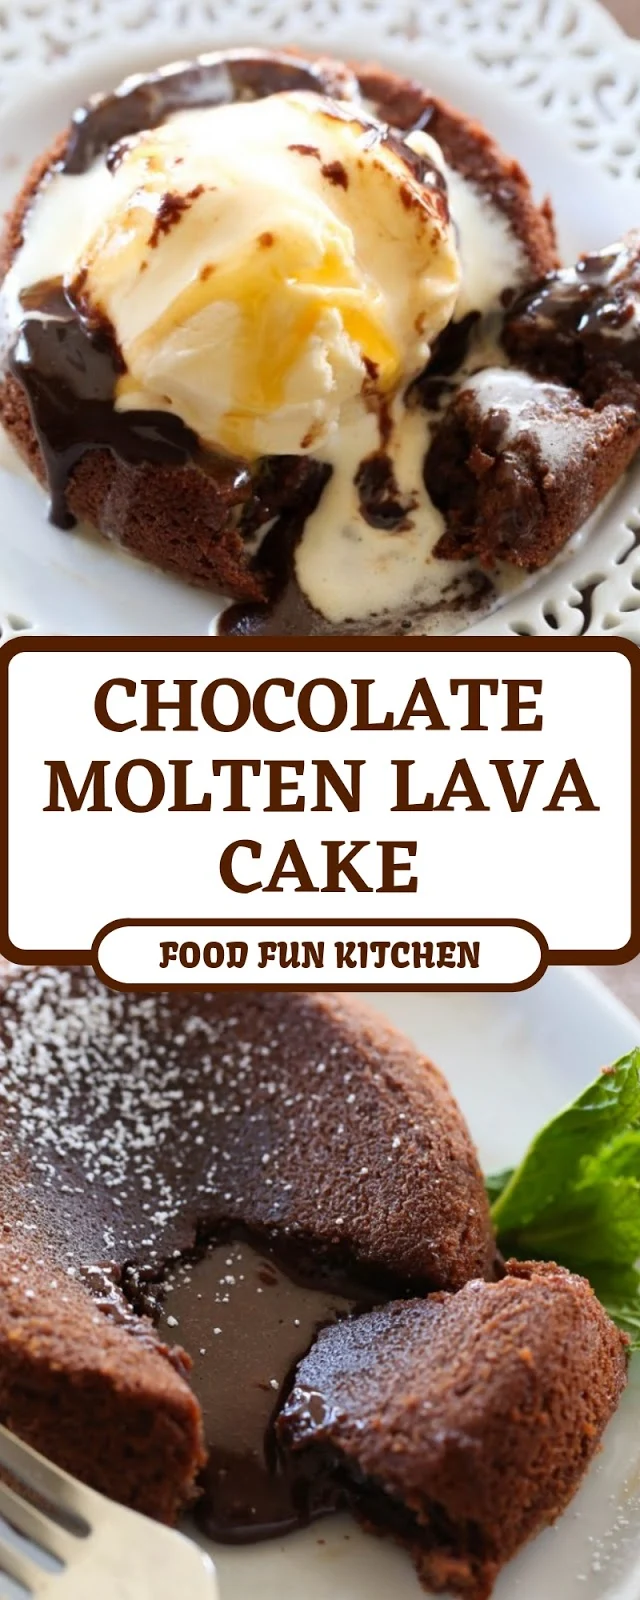 CHOCOLATE MOLTEN LAVA CAKE